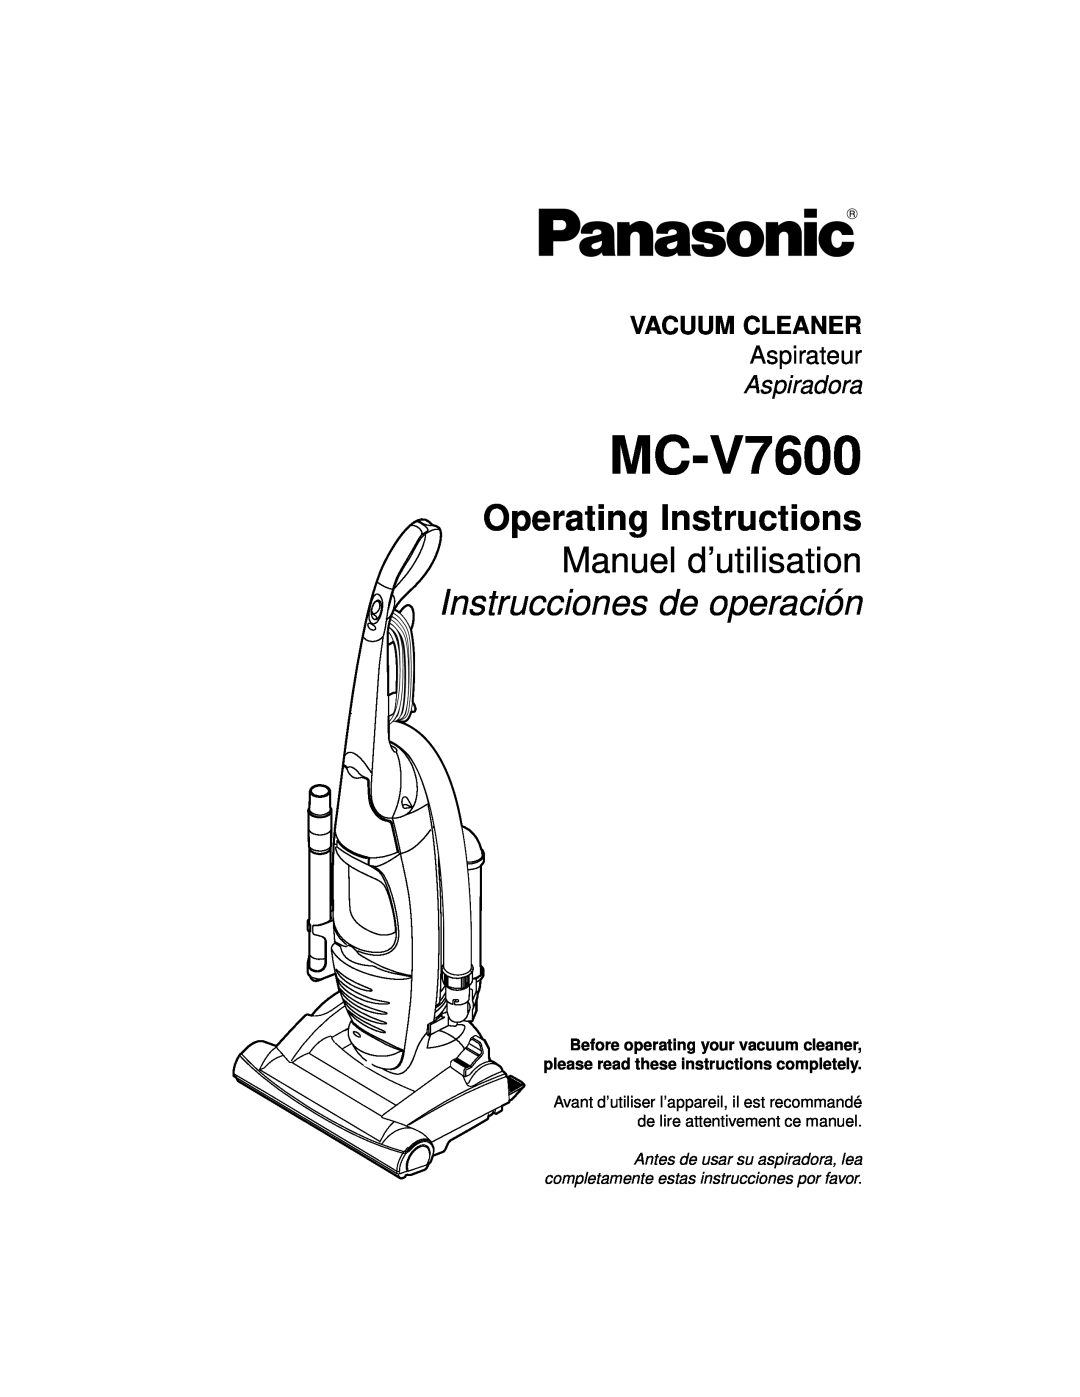 Panasonic MC-V7600 operating instructions Vacuum Cleaner, Aspirateur, Aspiradora 